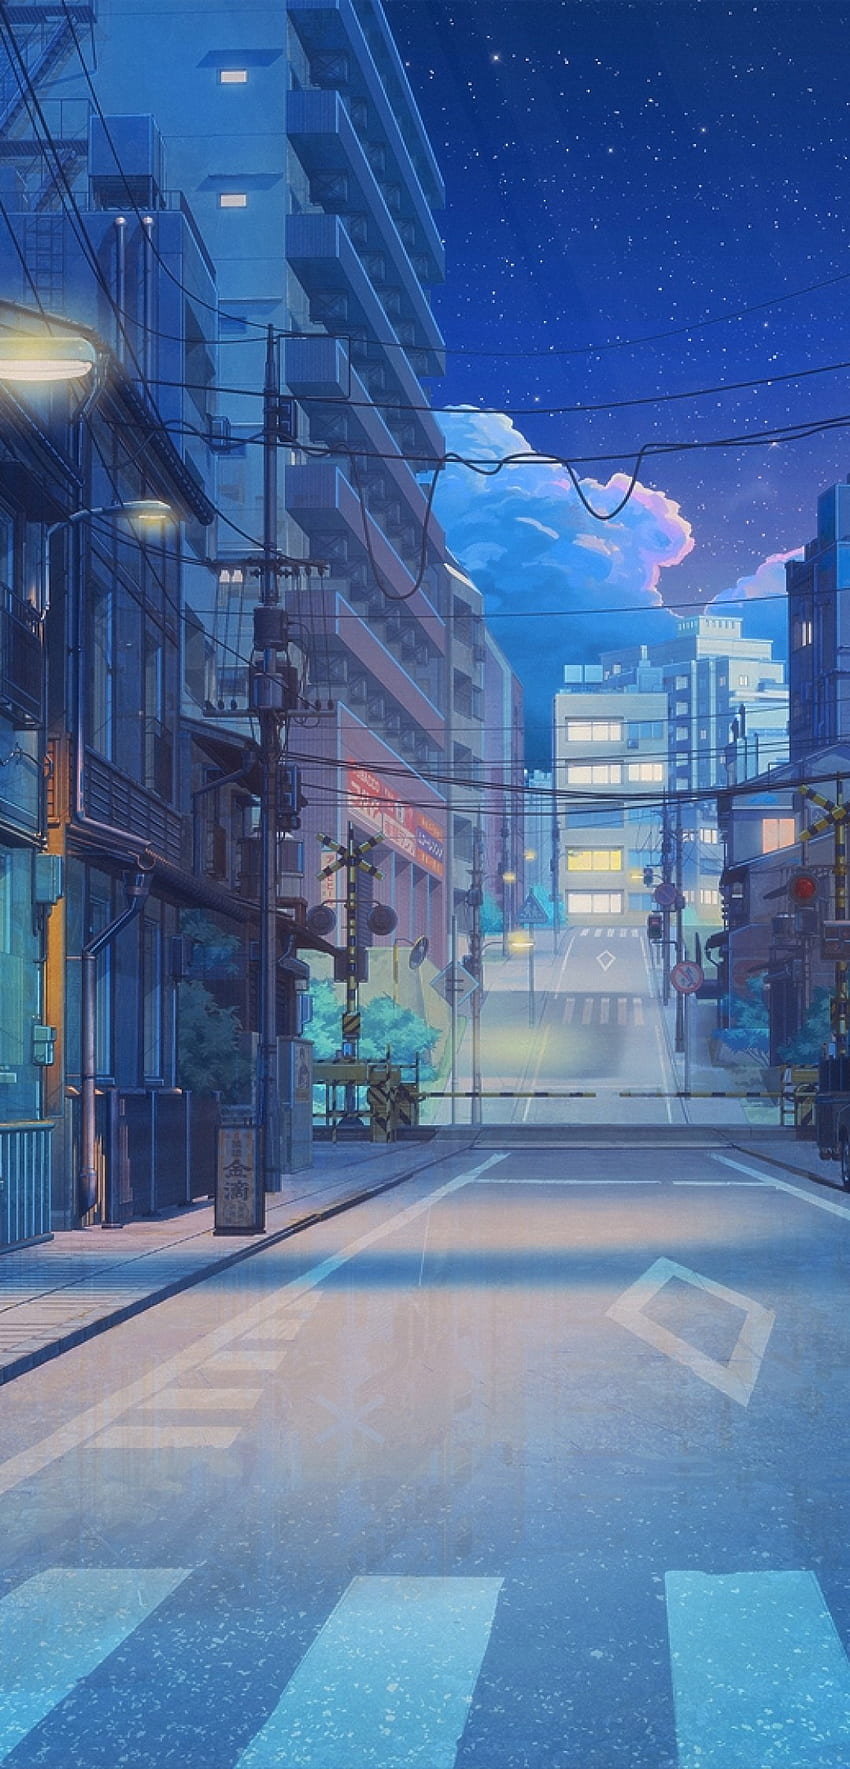 Anime Street, Road, Buildings, Scenery, Night, Stars para Xiaomi Mi 8 Pro, Anime Street Night fondo de pantalla del teléfono